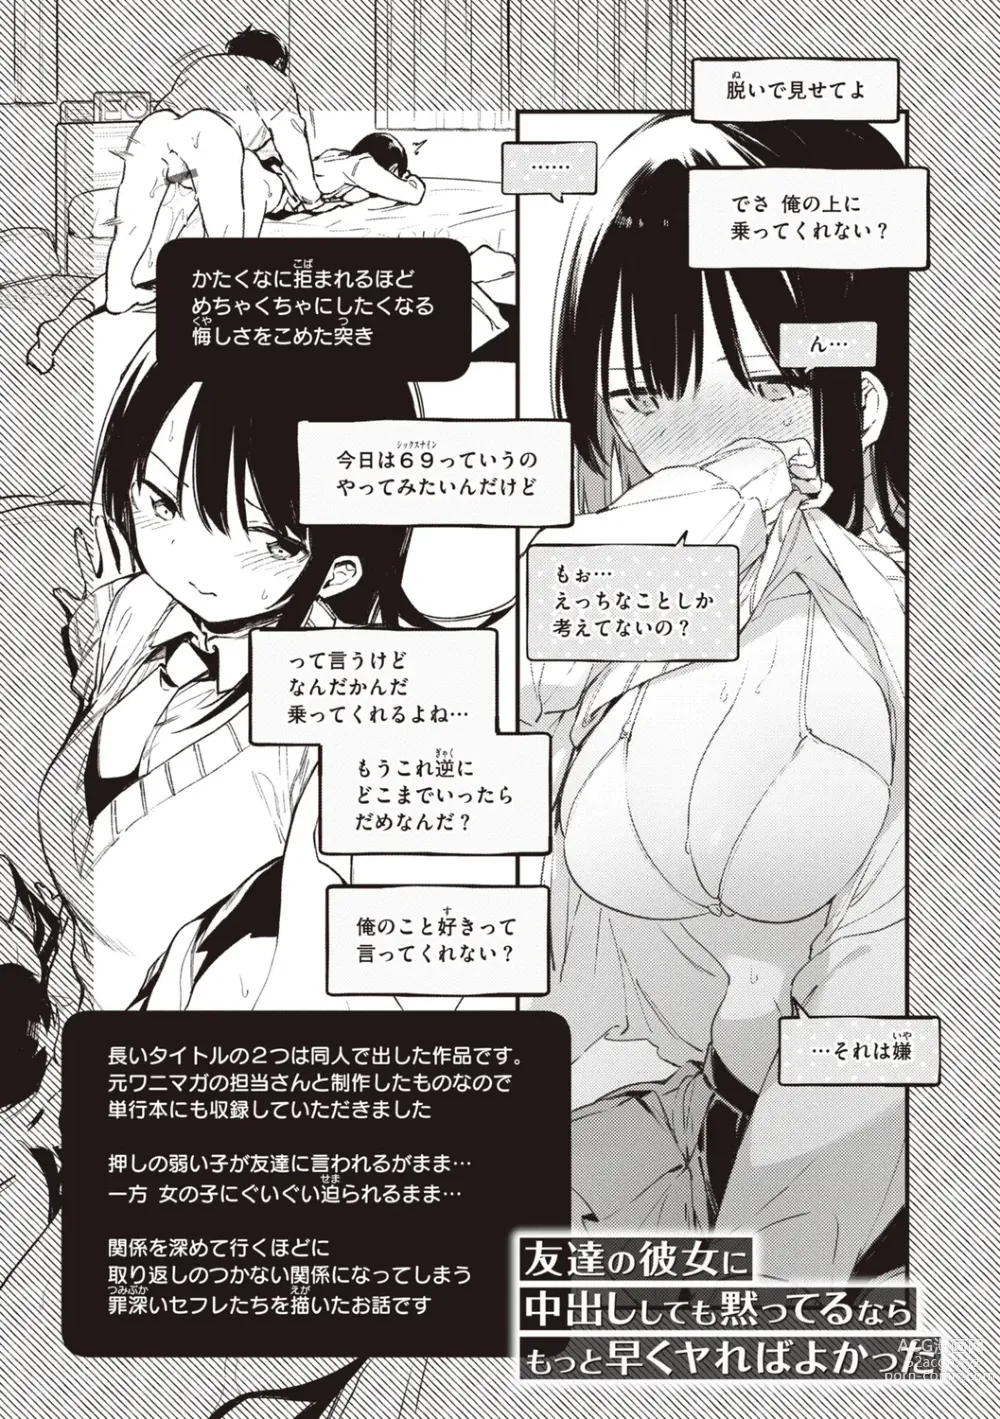 Page 173 of manga Nakushimono - Things I can´t find.